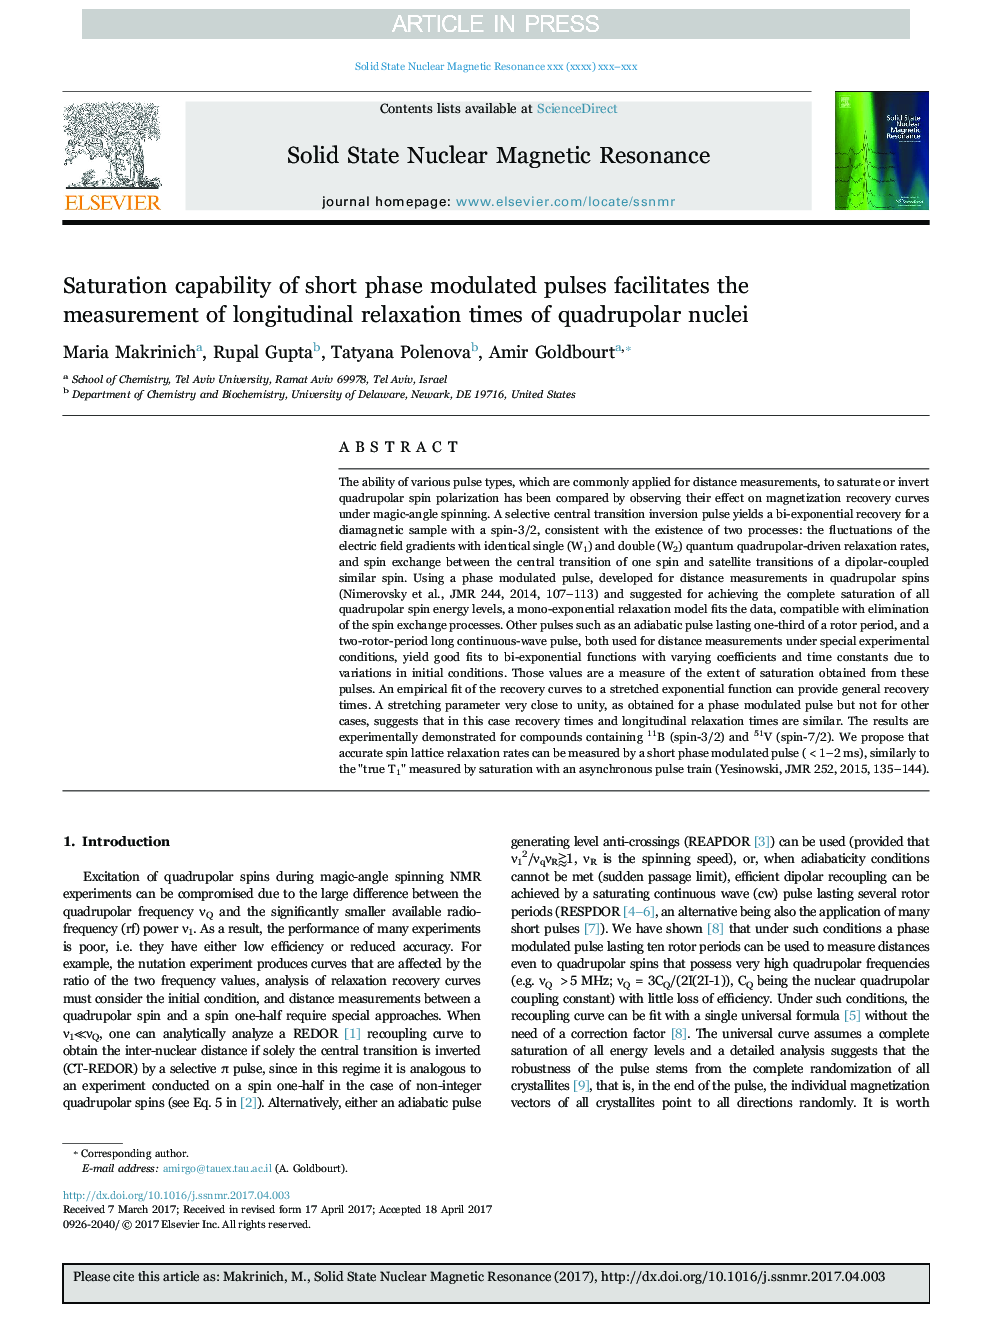 Saturation capability of short phase modulated pulses facilitates the measurement of longitudinal relaxation times of quadrupolar nuclei